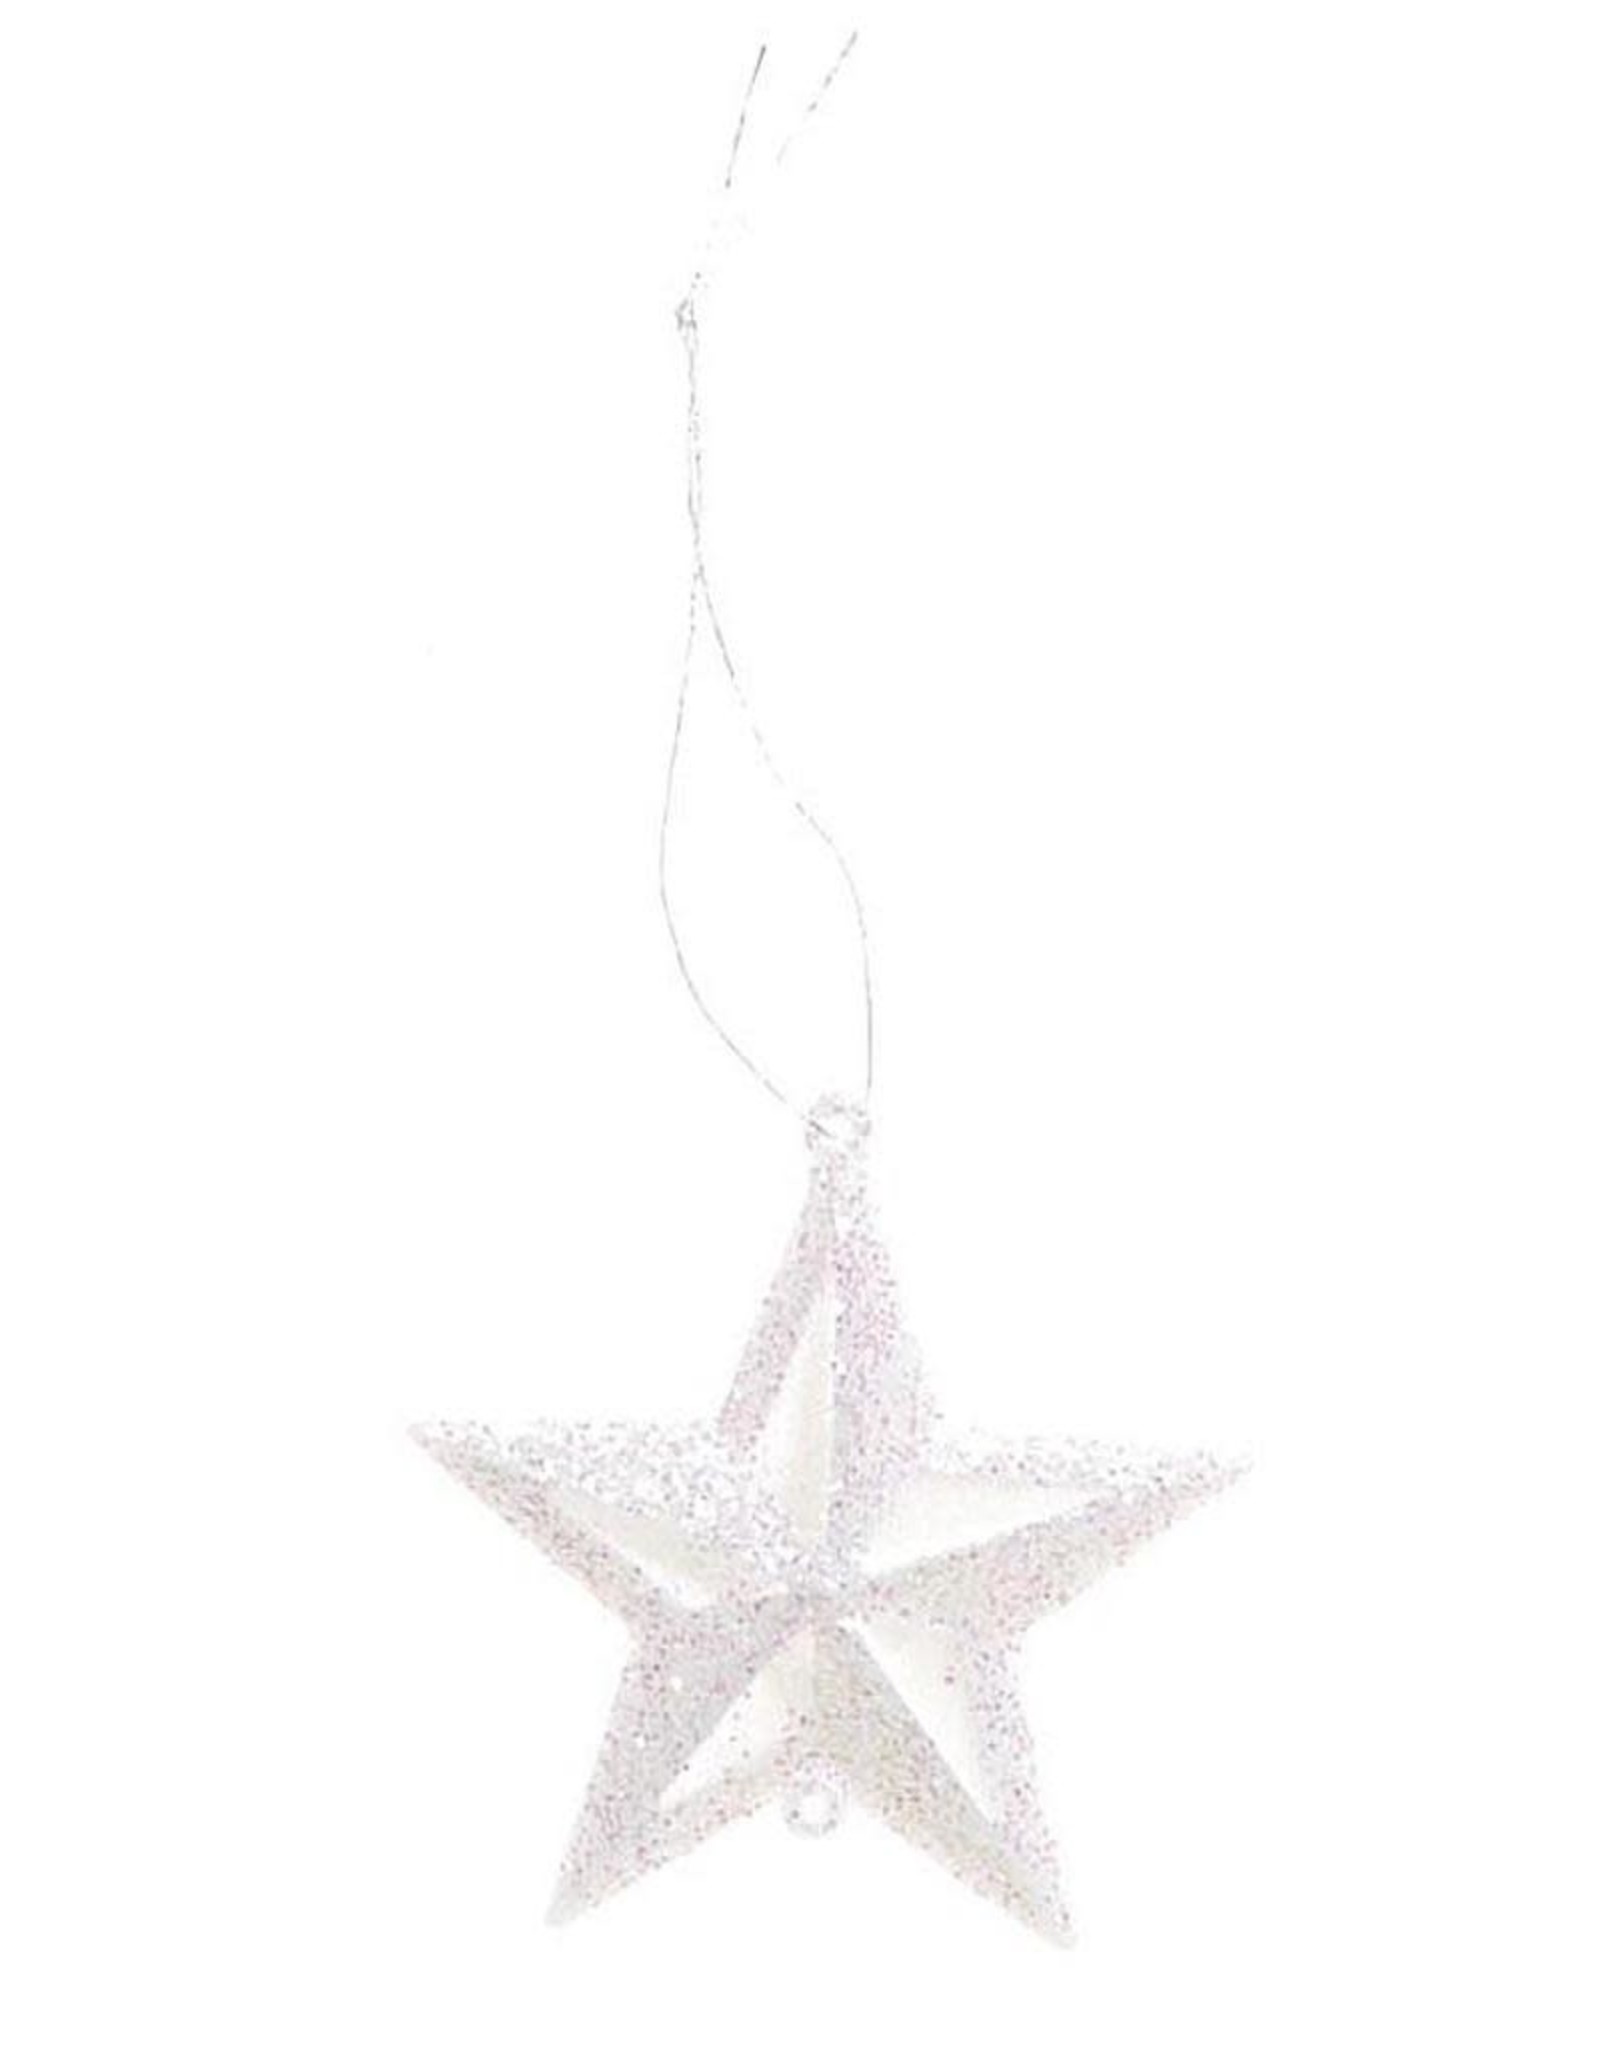 Darice Mini Glittered 3D White Stars Ornaments 12-Pack 2 Inch